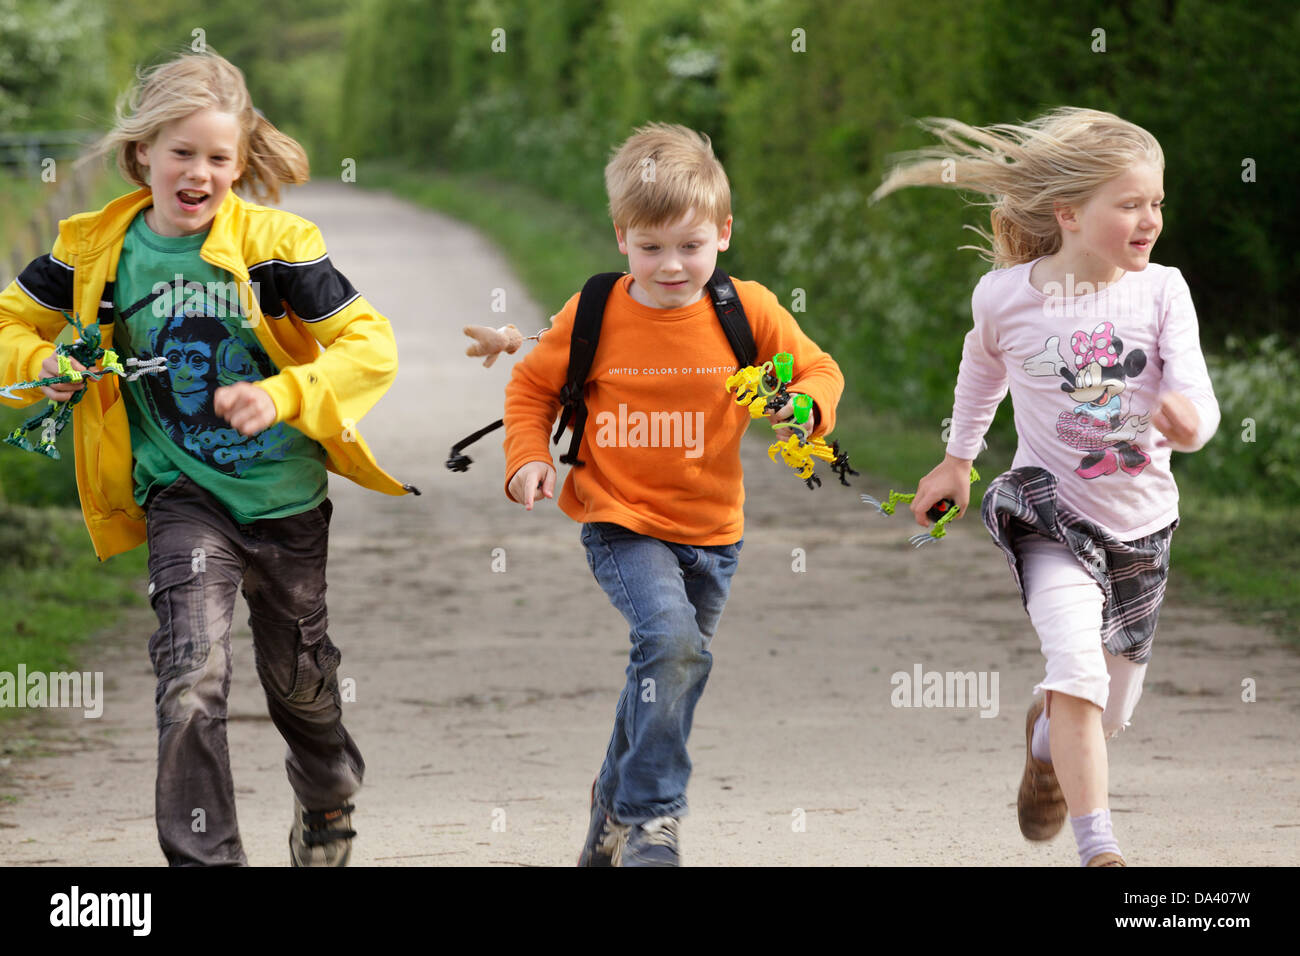 three children running along a path Stock Photo